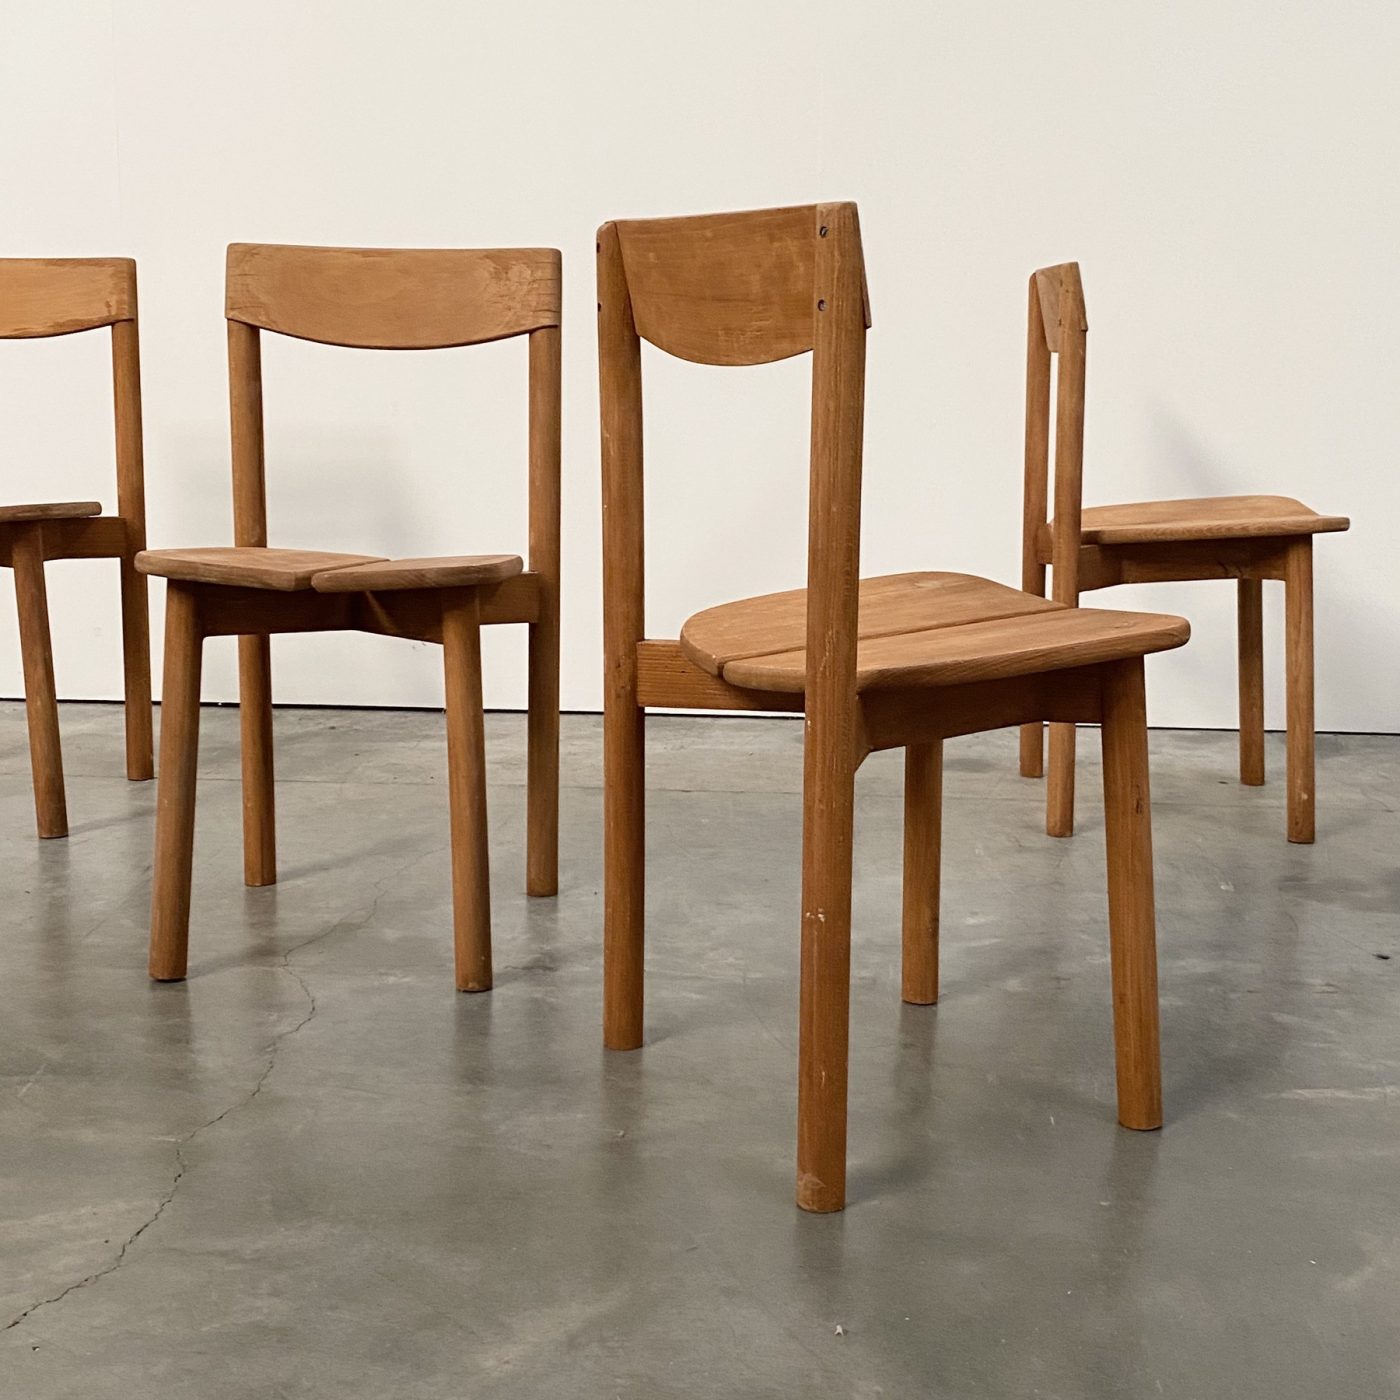 objet-vagabond-midcentury-chairs0005